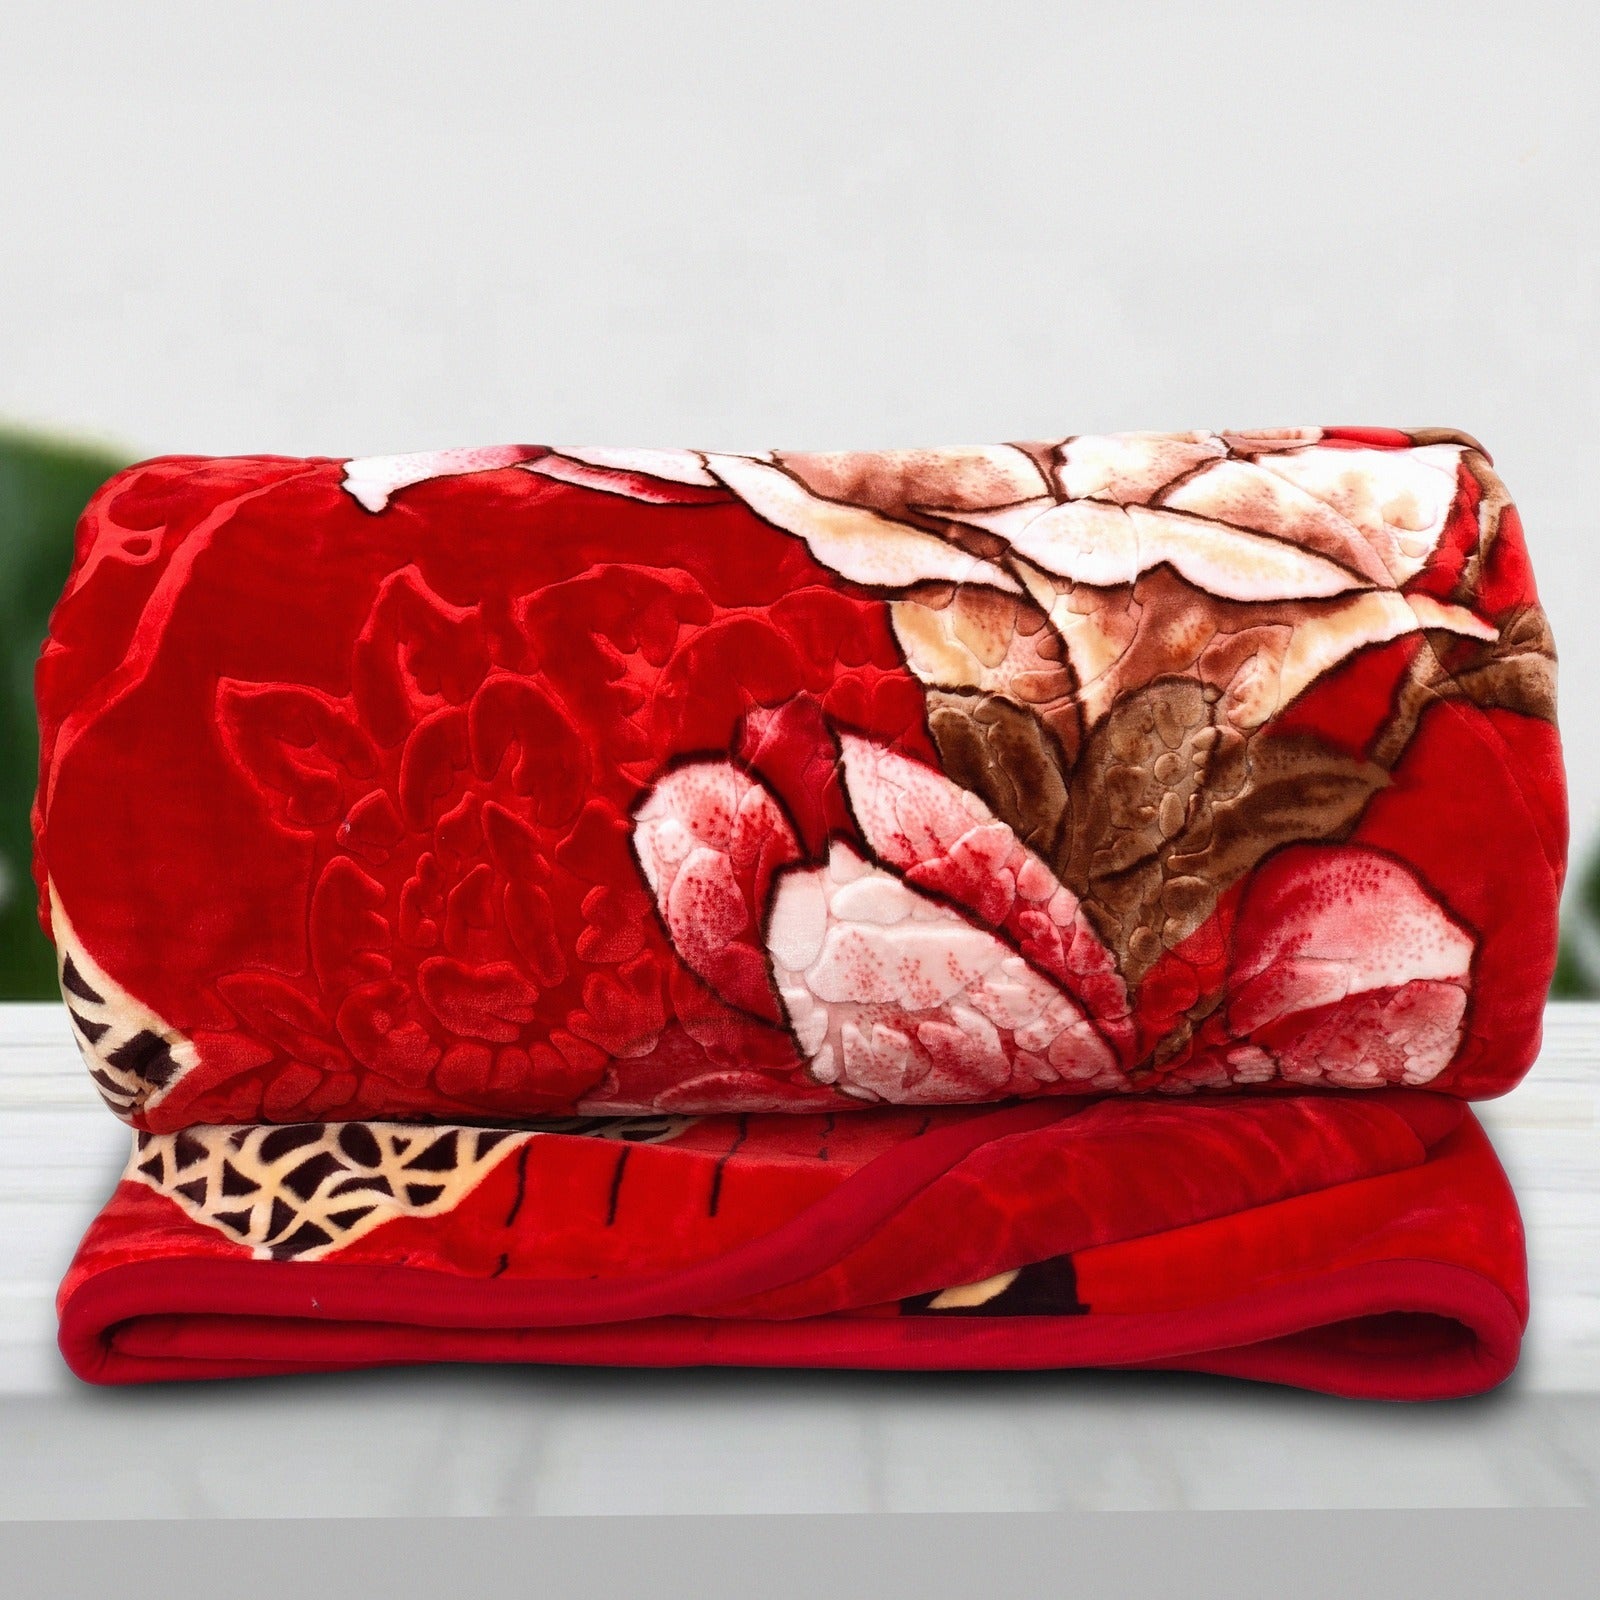 True Love Multi Colour Floral Print Soft King Size Winter Blanket 220*240 cm Zaappy